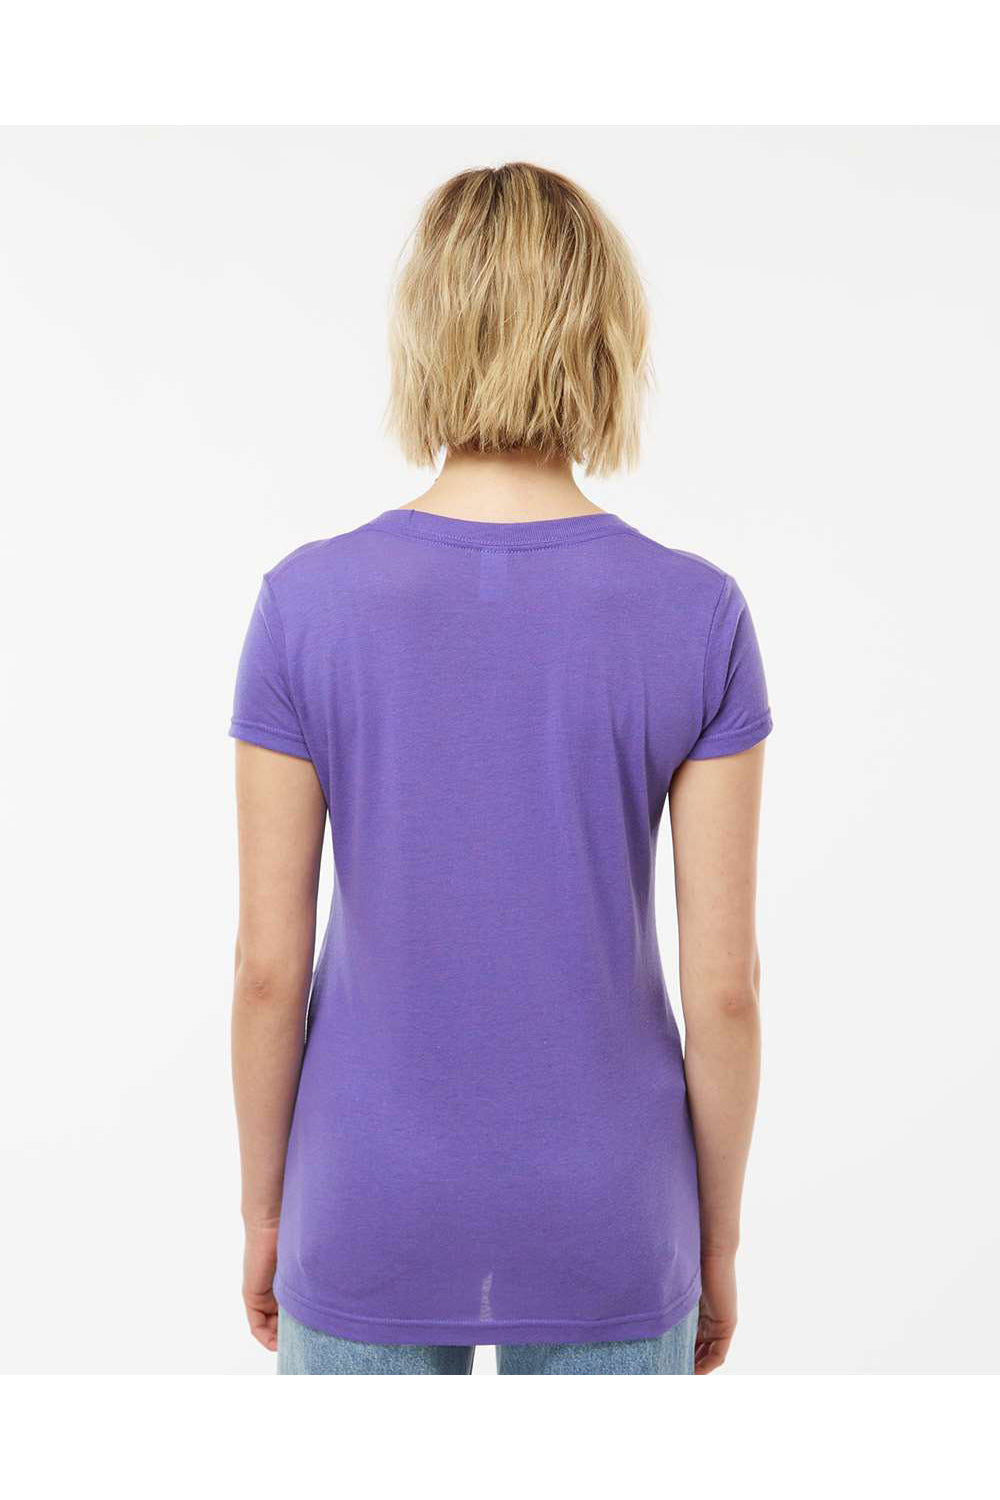 Tultex 253 Womens Short Sleeve Crewneck T-Shirt Lilac Purple Model Back